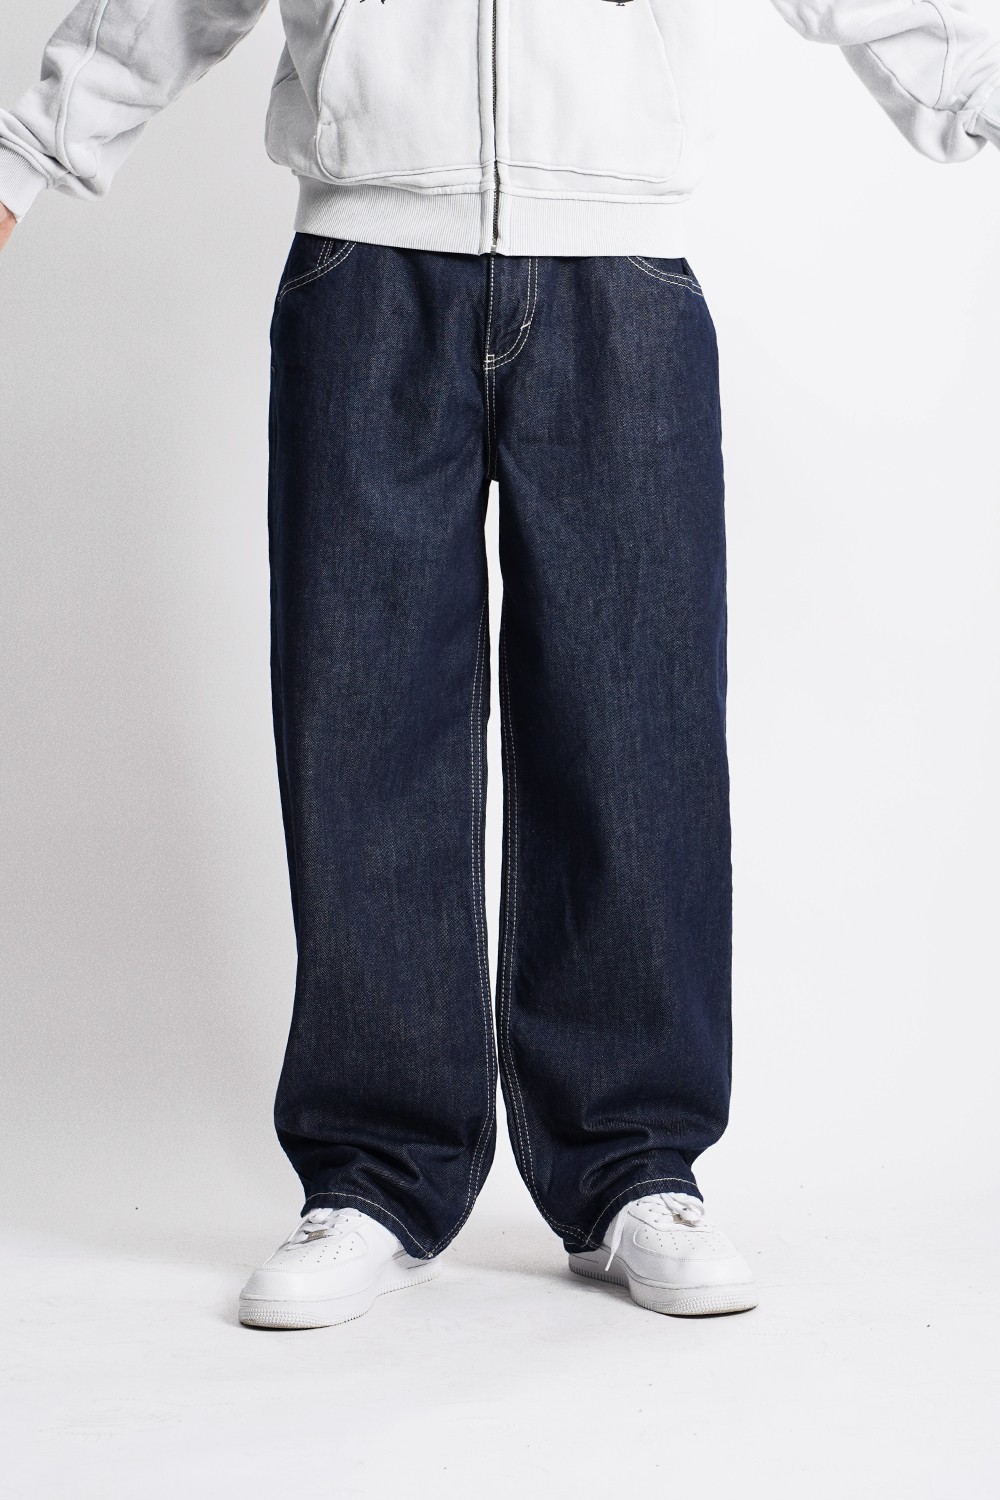 Indigo Loose Fit Jeans (URBN-B-177)